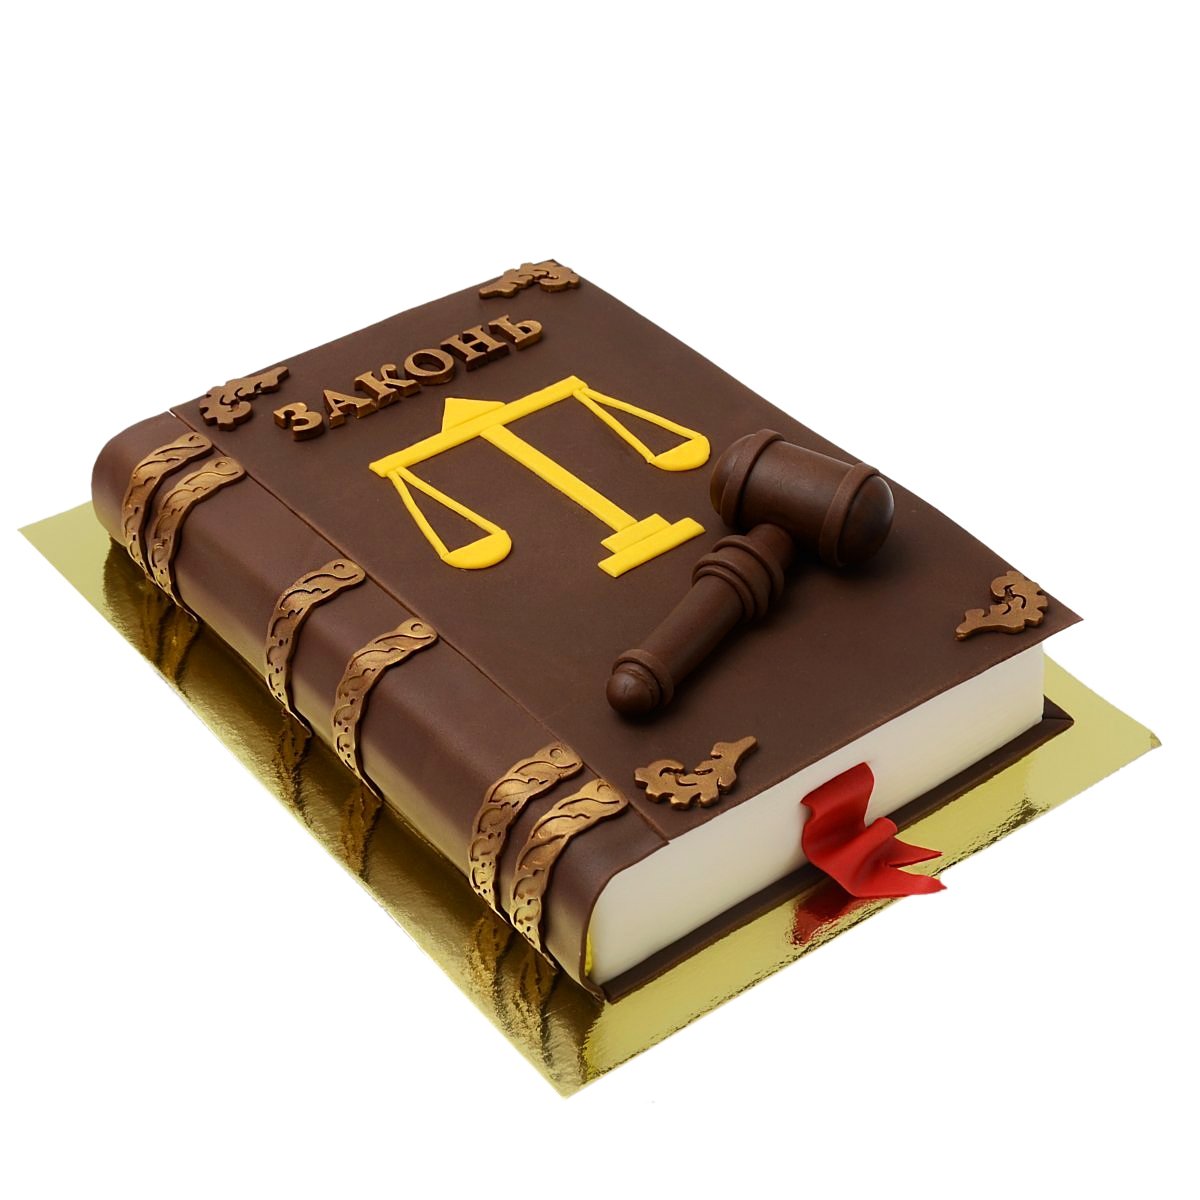 Diploma Book Cake - Rashmi's Bakery